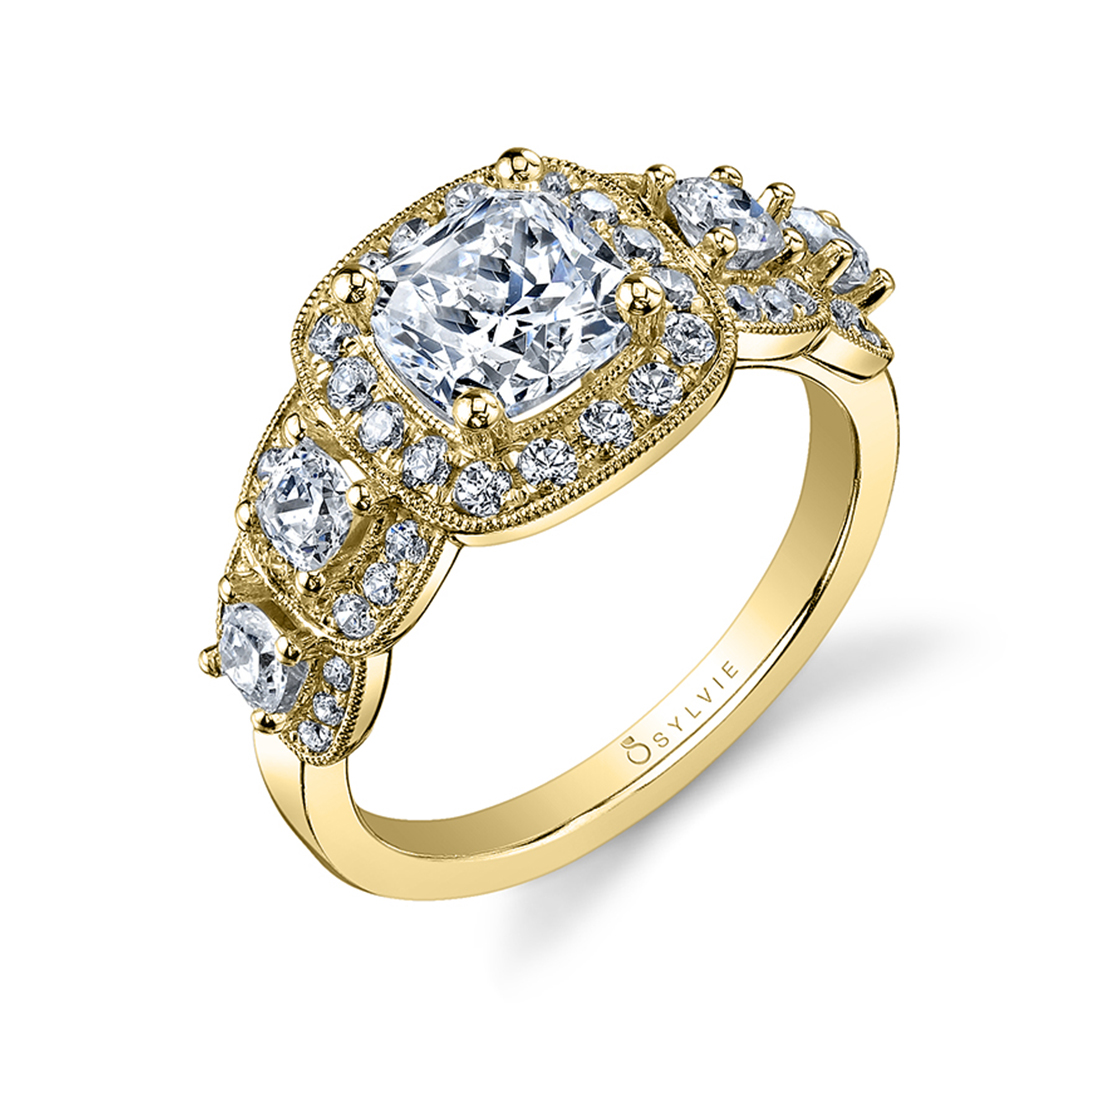 Vintage Inspired 5 Stone Engagement Ring - Sylvie